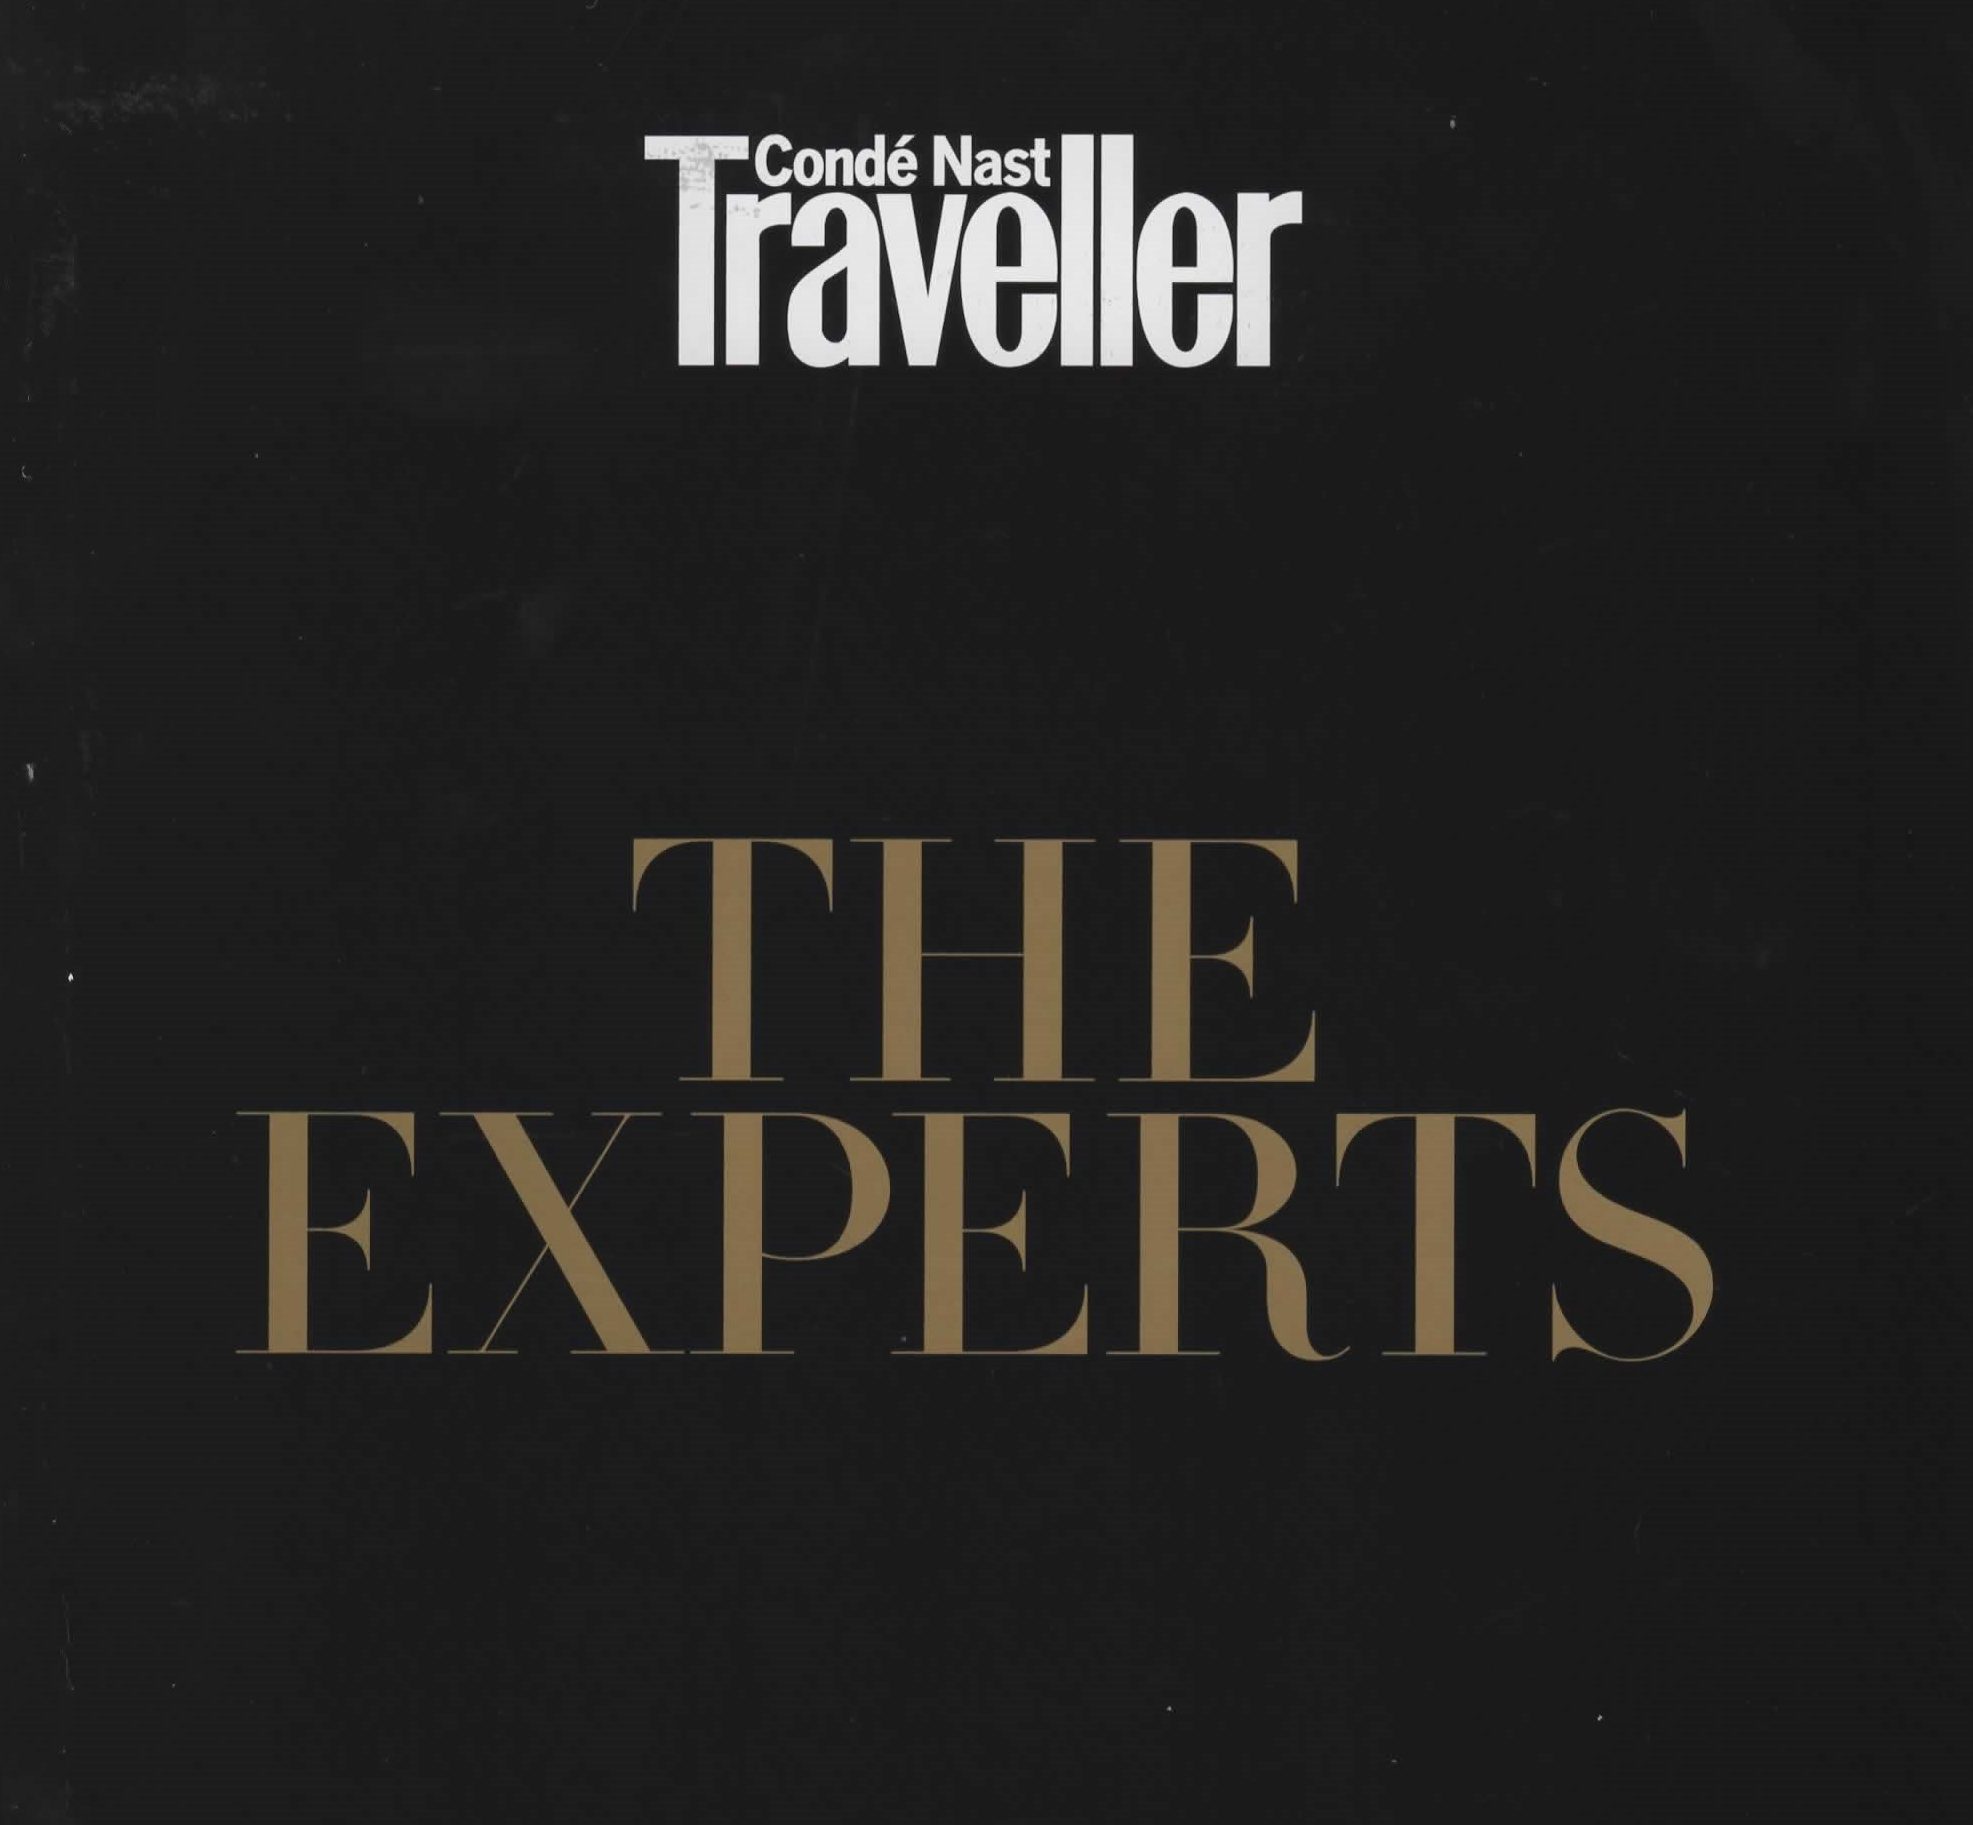 conde nast travel experts